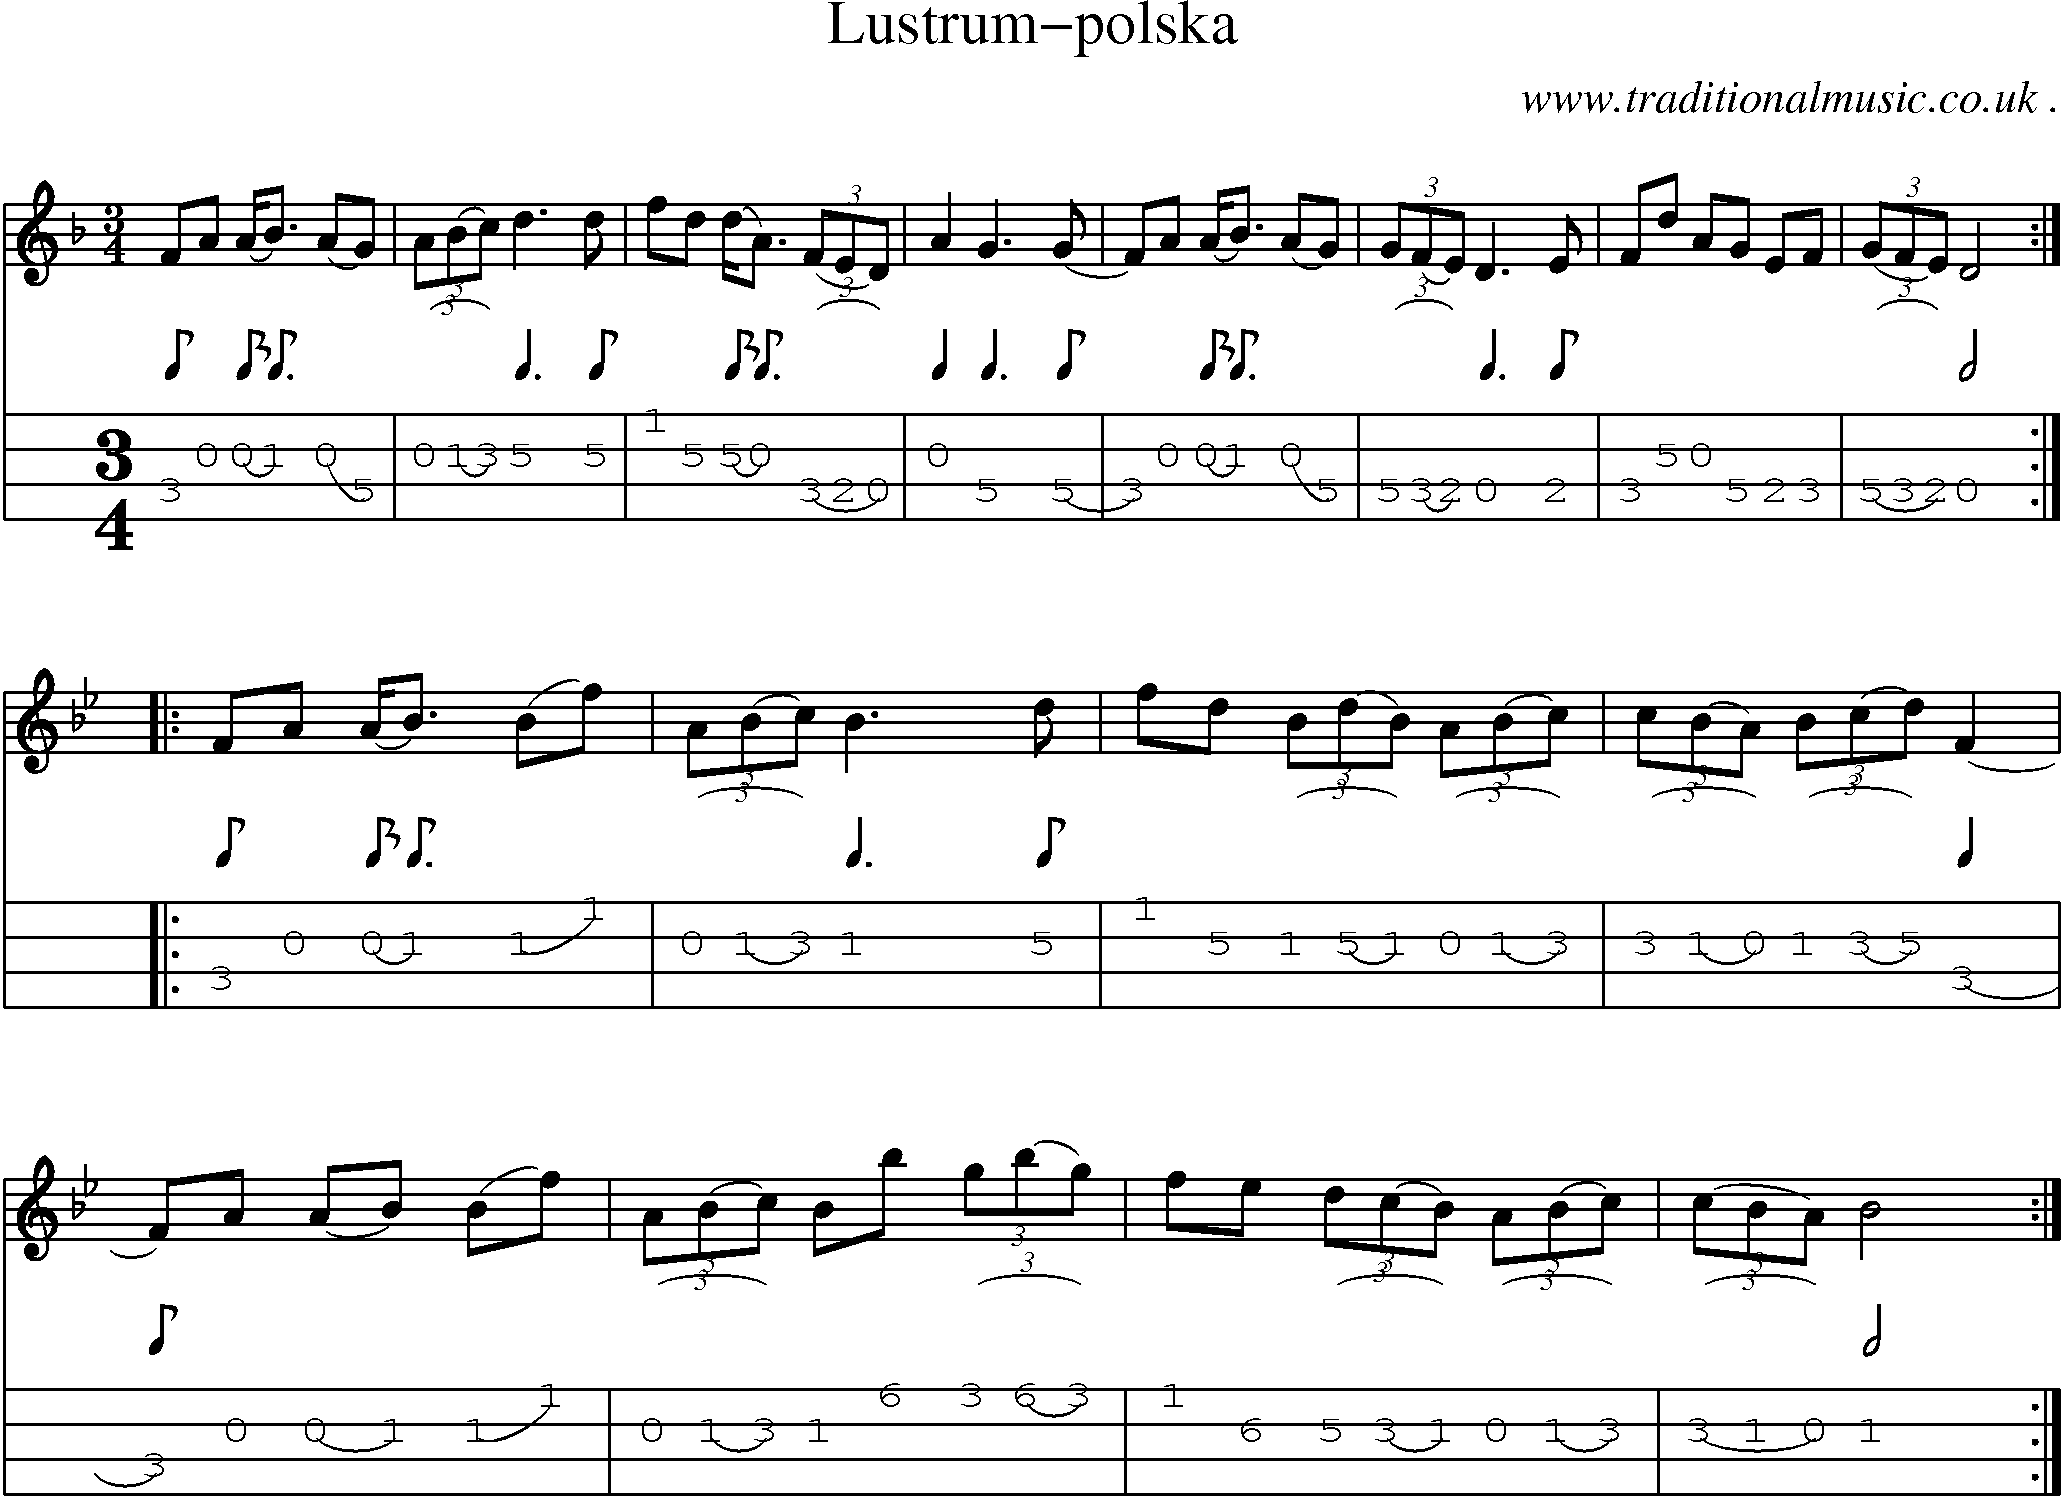 Sheet-Music and Mandolin Tabs for Lustrum-polska